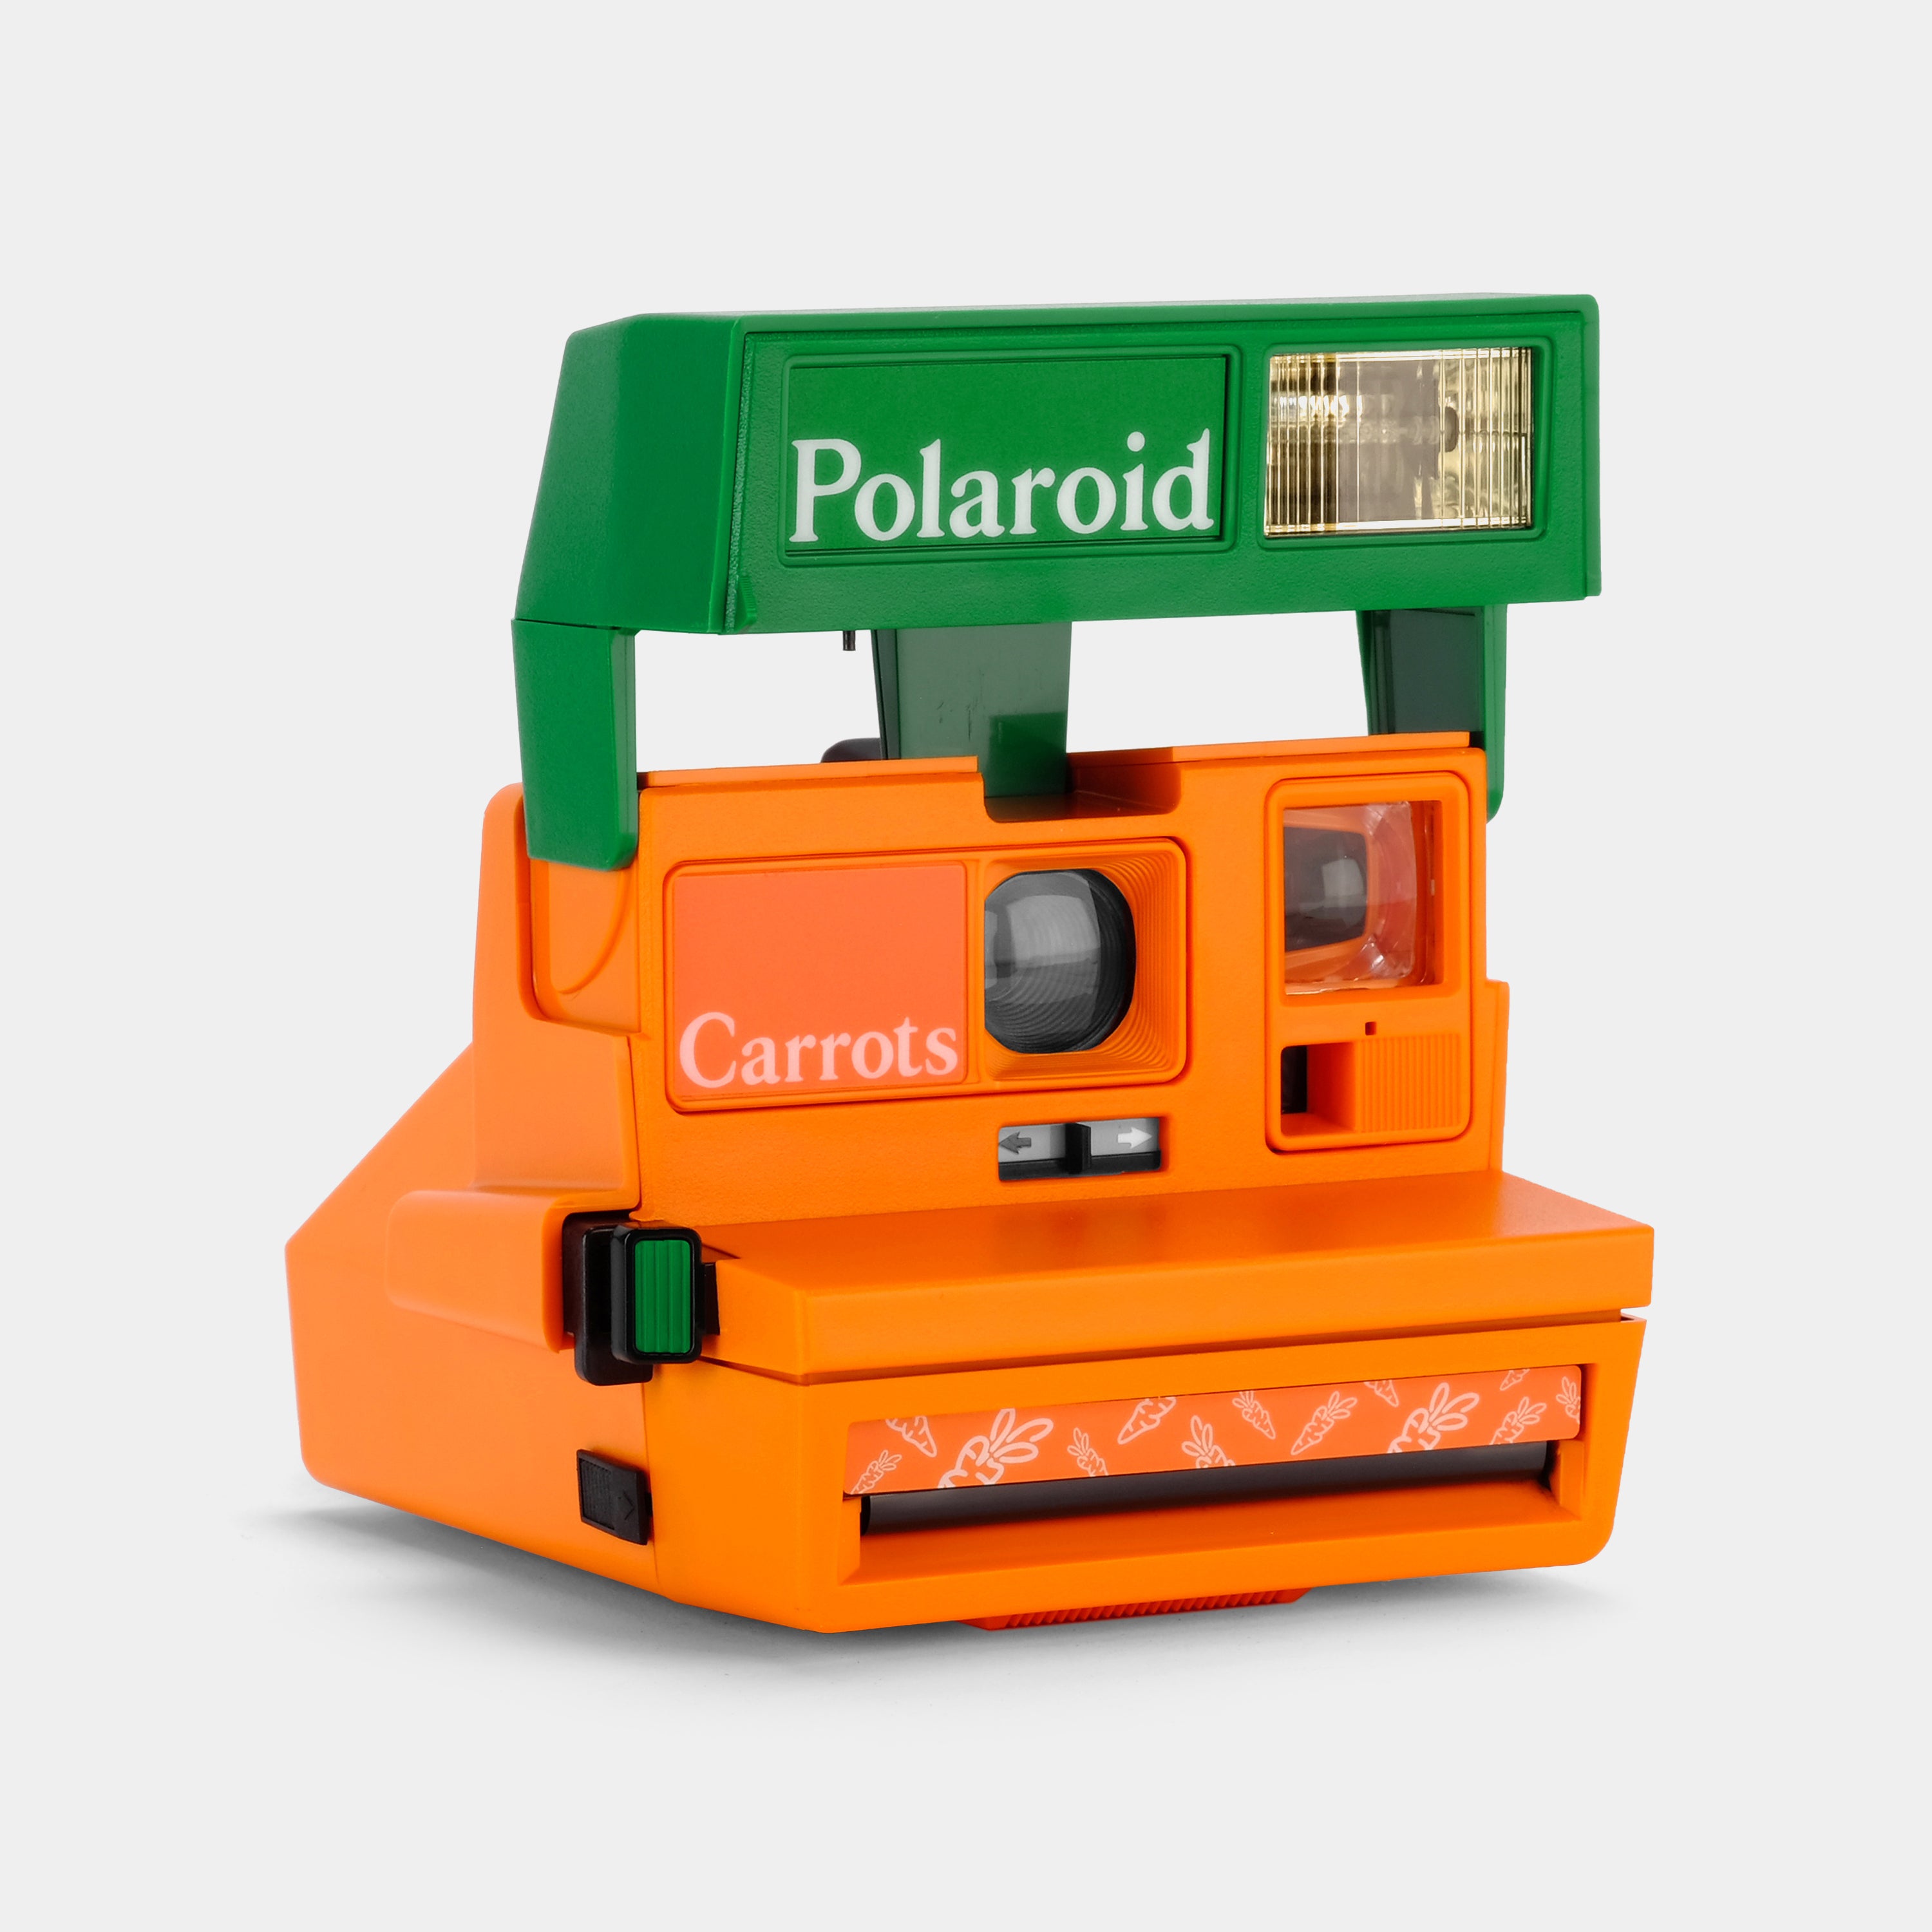 Polaroid 600 Carrots by Anwar Carrots Instant Film Camera